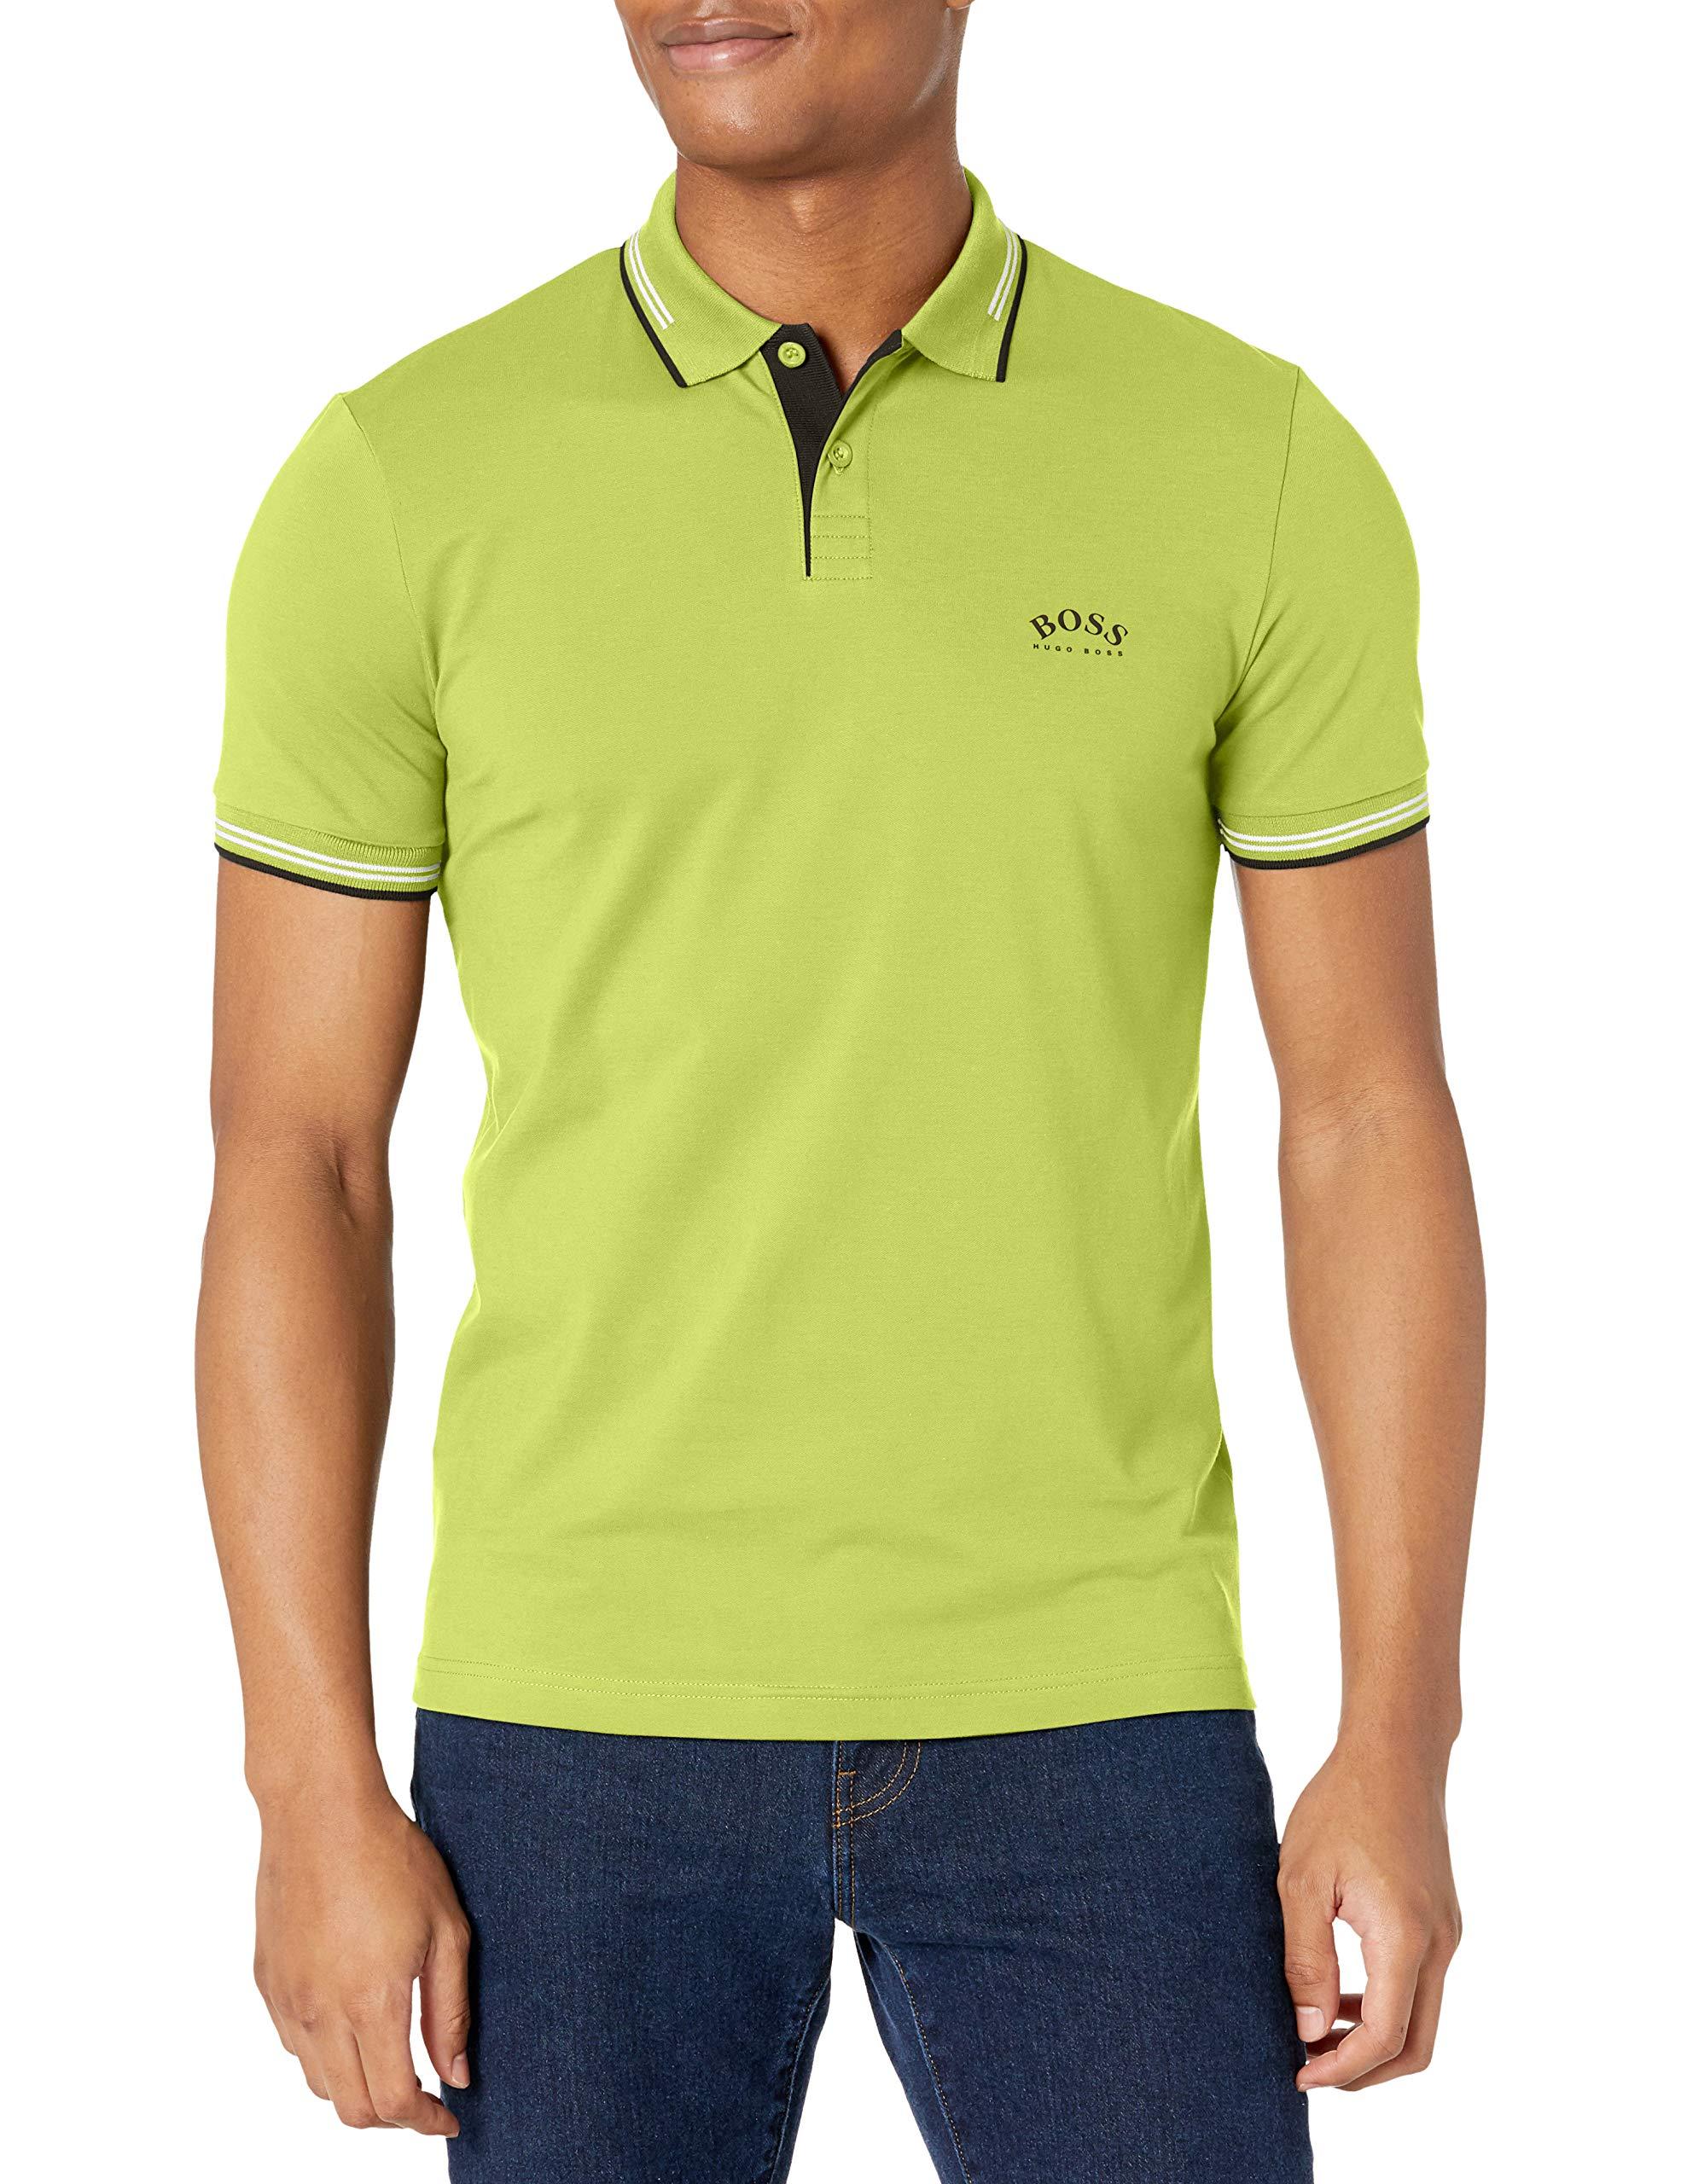 Hugo Boss Green Polo T Shirt Sale Online, SAVE 49% - lutheranems.com